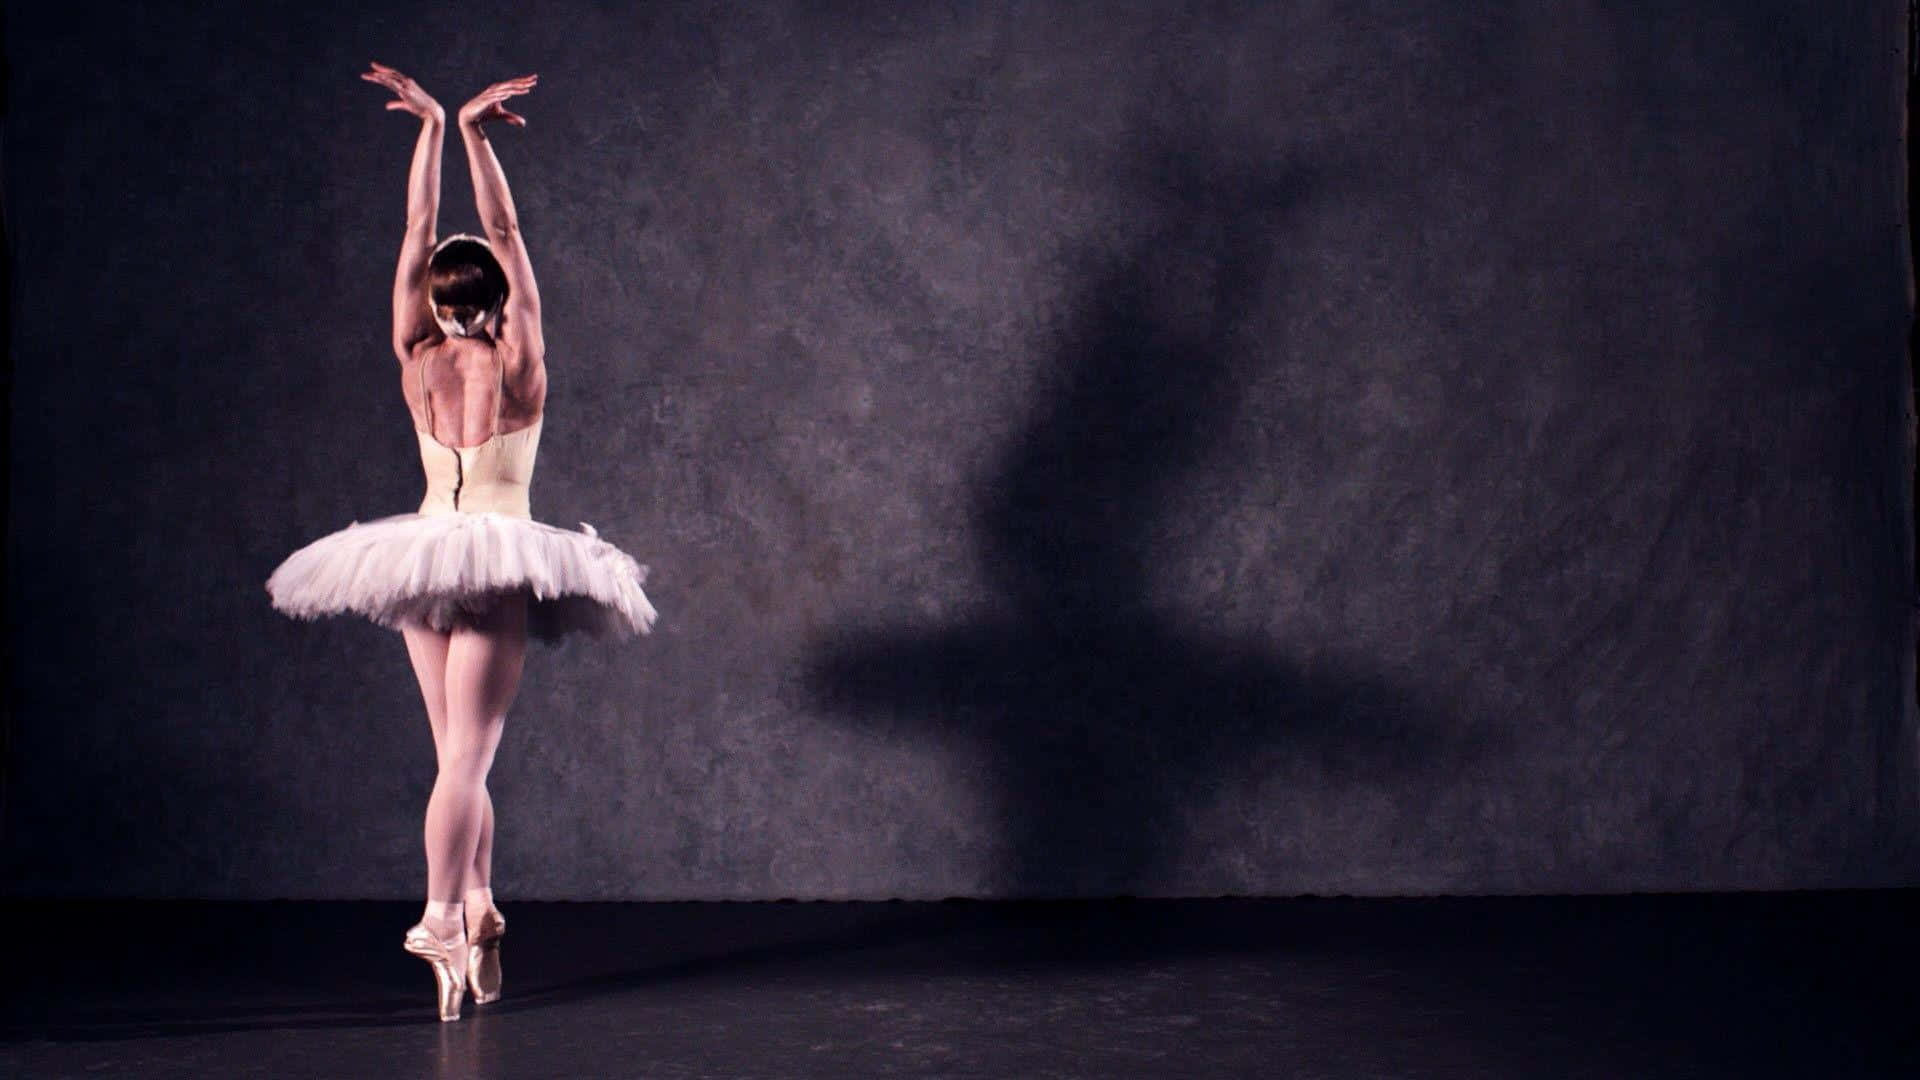 A graceful ballet dancer in mid-performance.